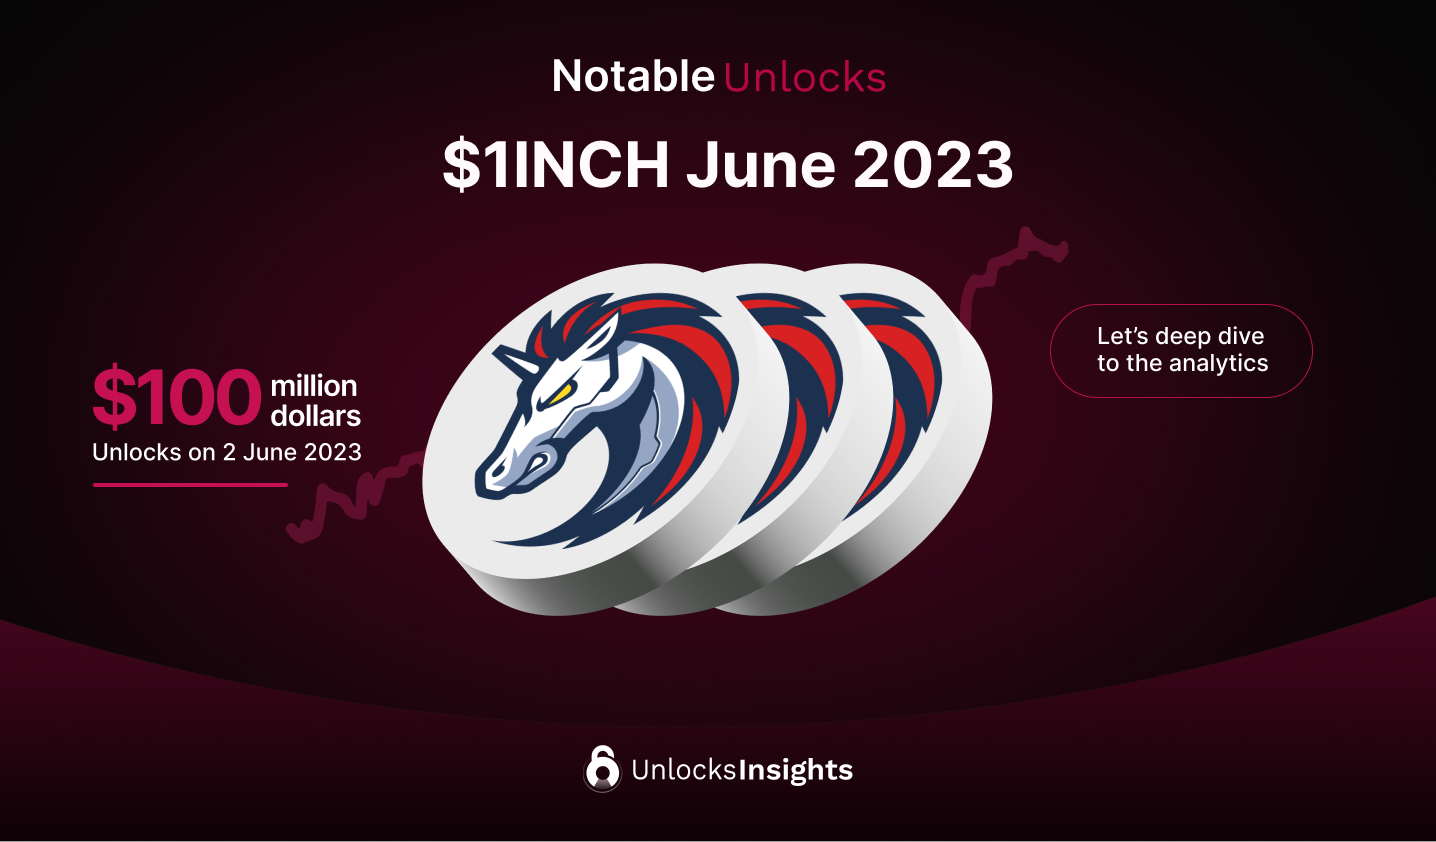 Notable Unlocks : $1INCH the final $100M June 2023